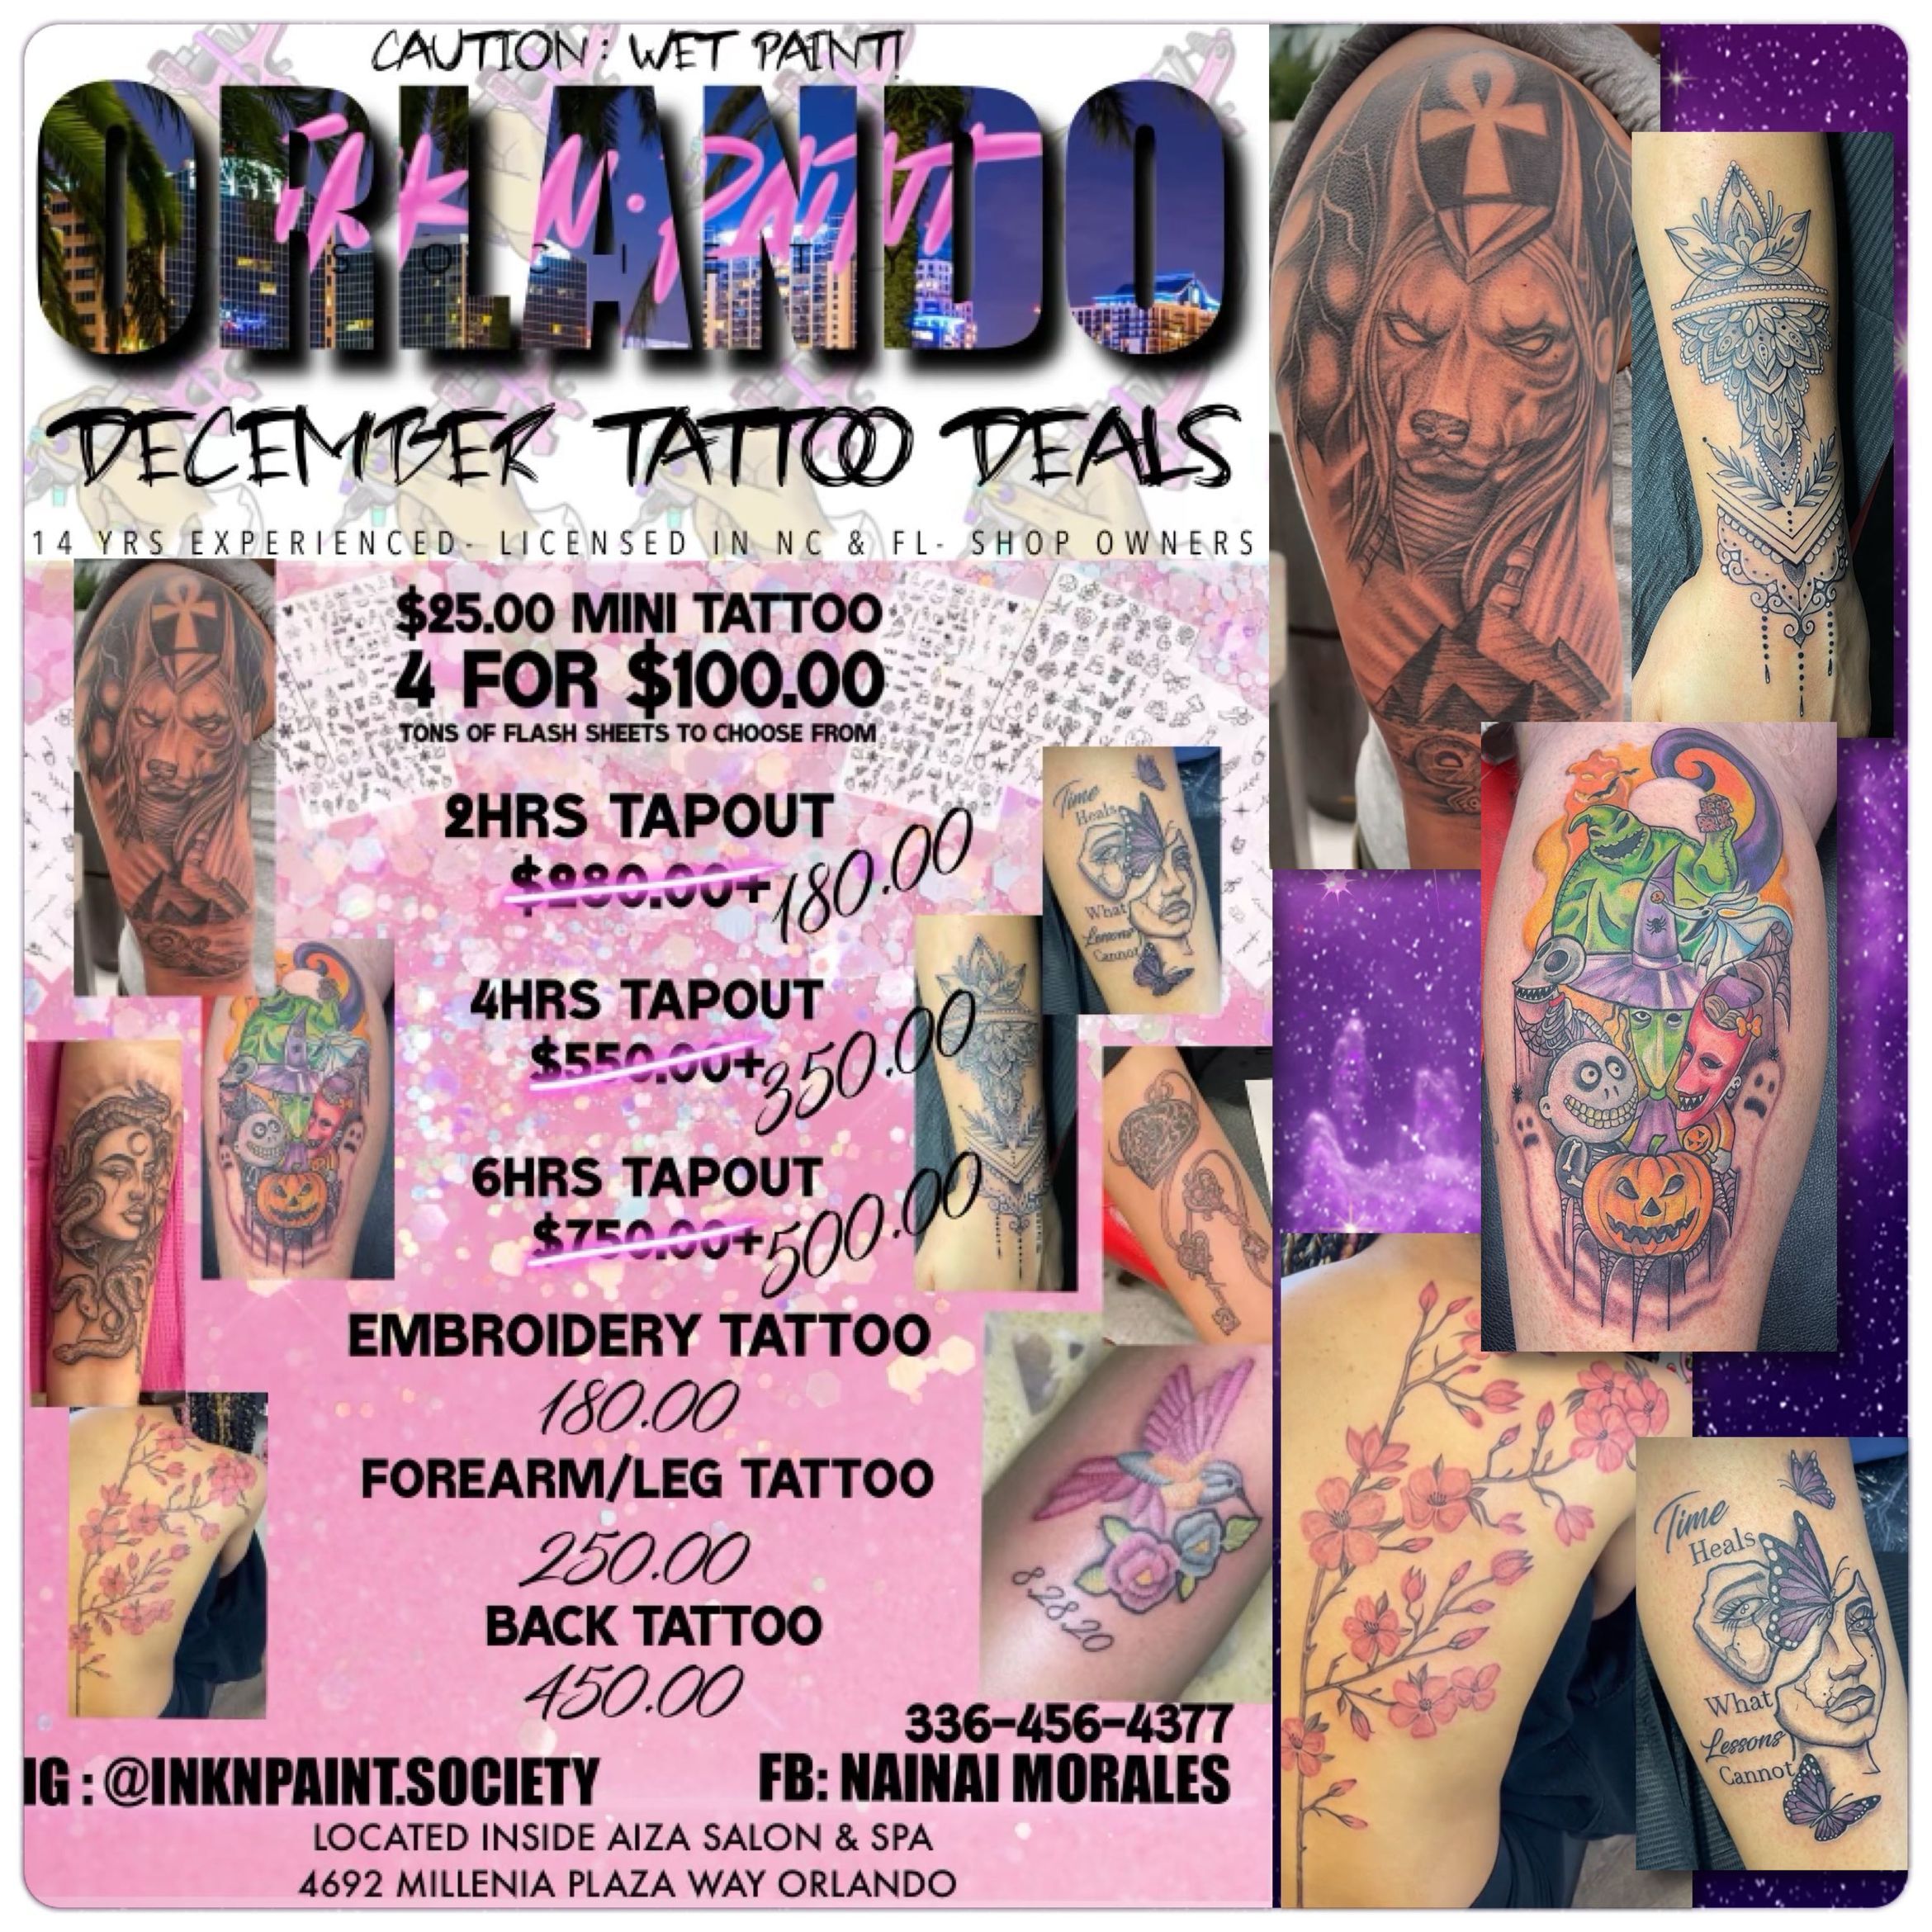 Back tattoo : $500 portfolio